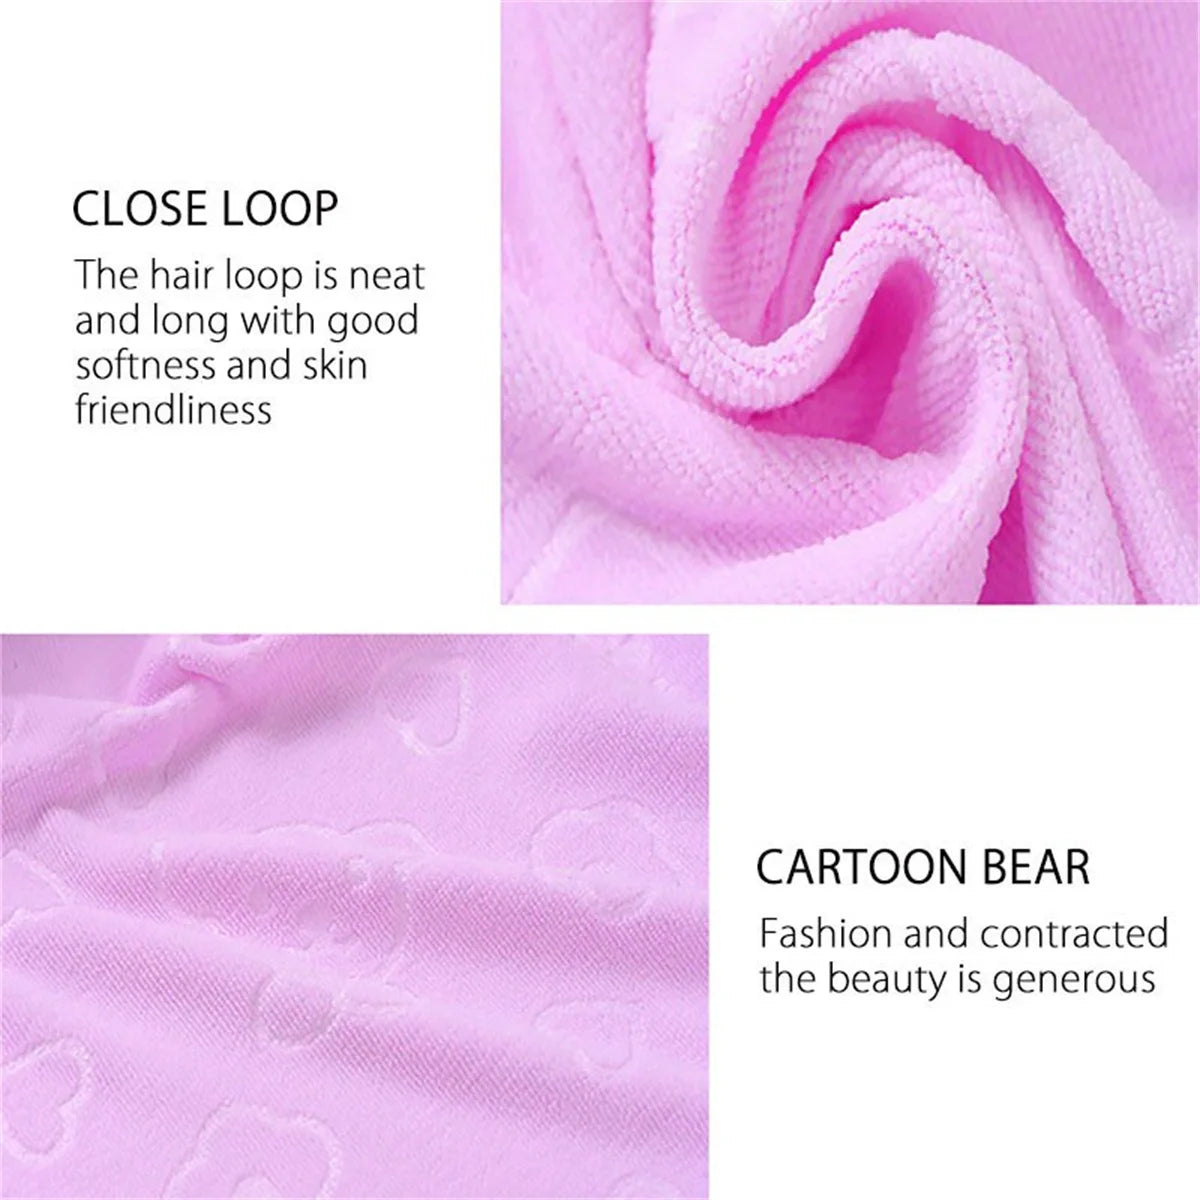 Baby Kids Bath Microfiber High Absorbent Towel Blanket Cute AnimalTuala Mandi (70*140cm)